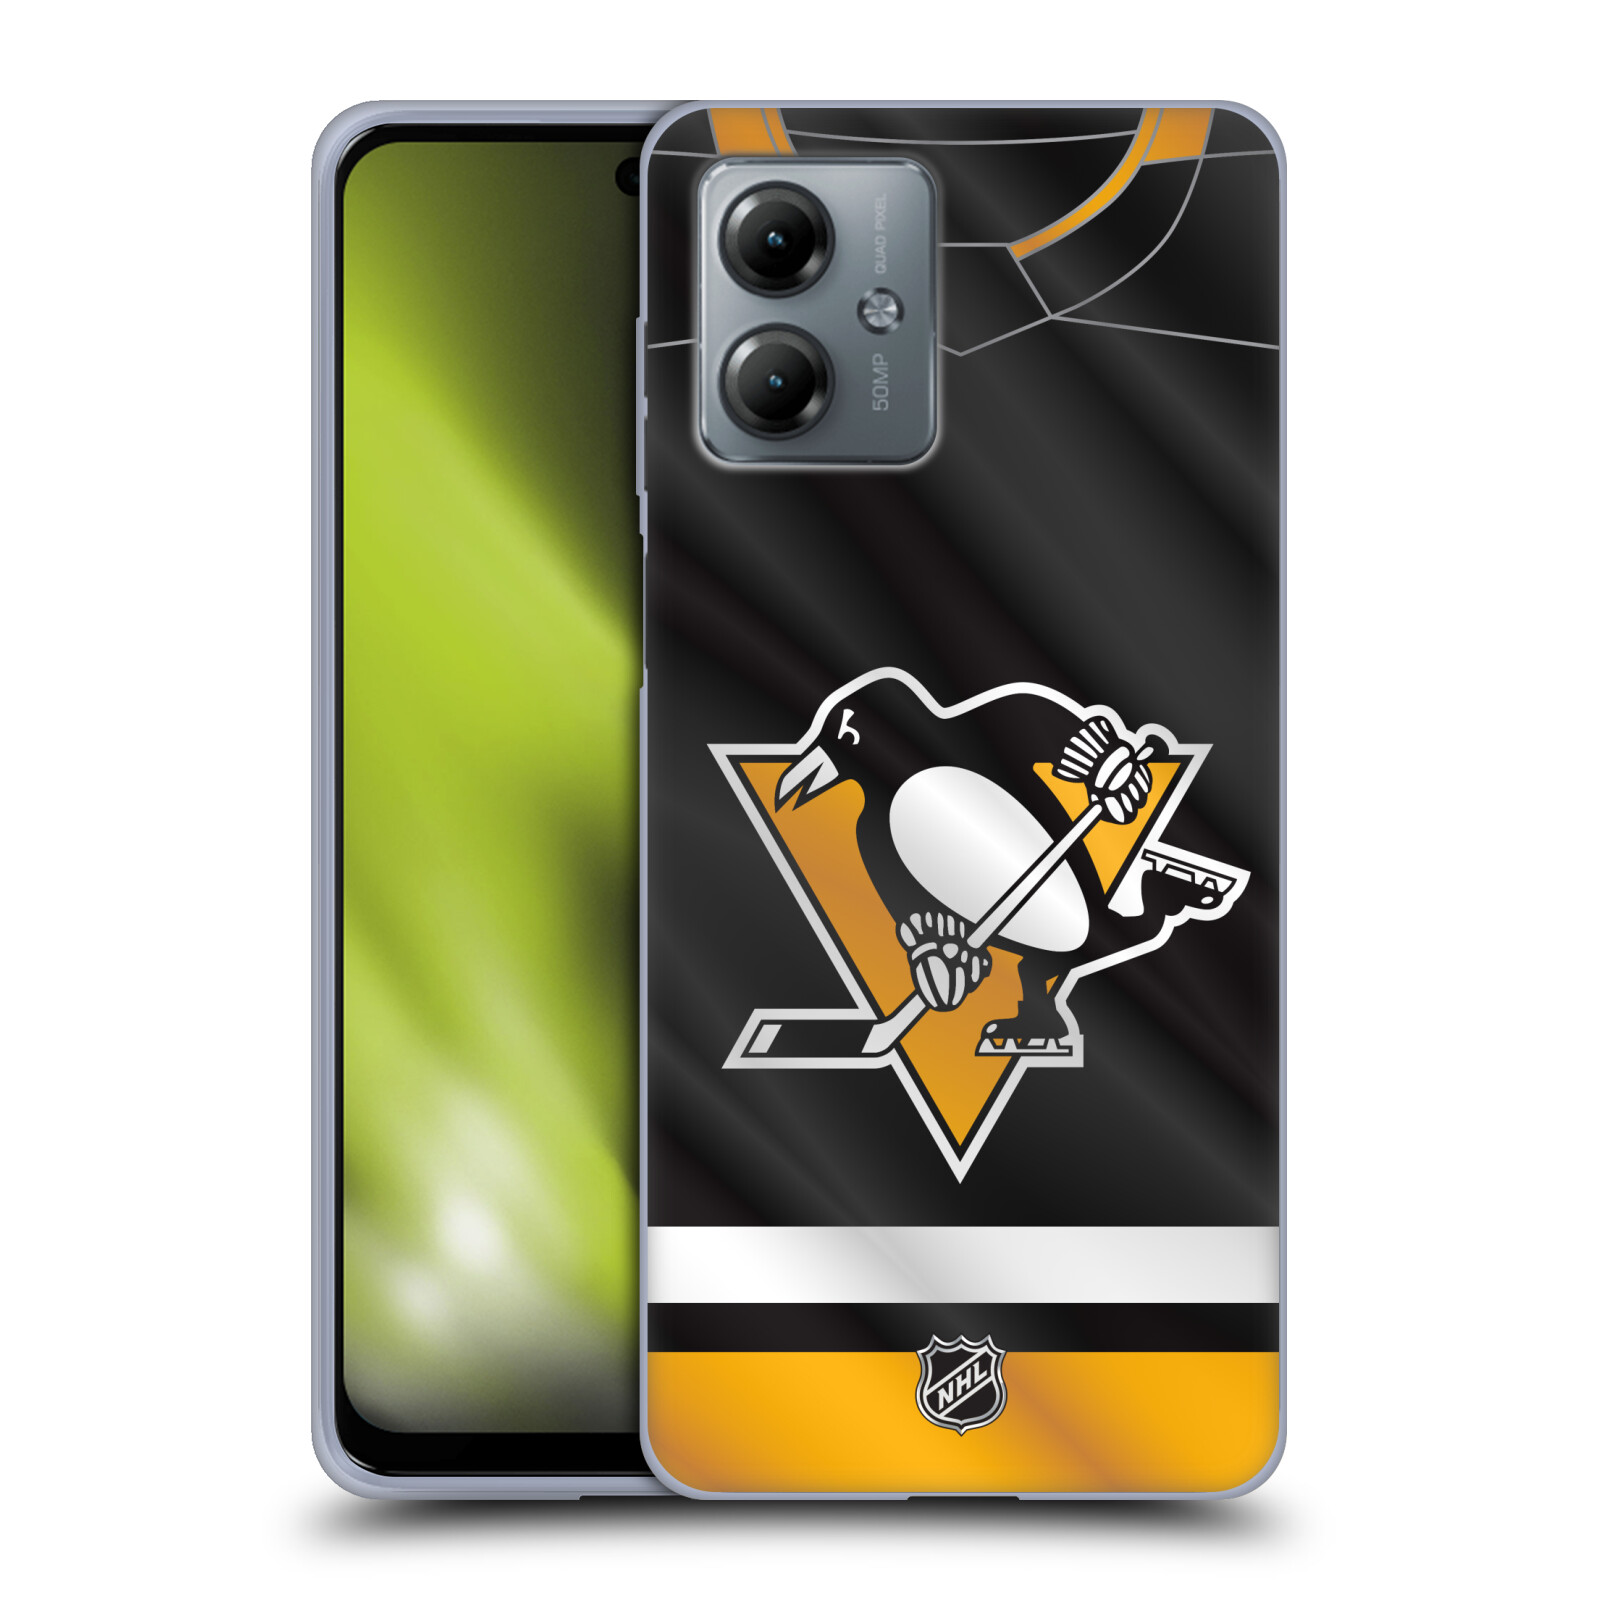 Silikonové pouzdro na mobil Motorola Moto G14 - NHL - Dres Pittsburgh Penguins (Silikonový kryt, obal, pouzdro na mobilní telefon Motorola Moto G14 s licencovaným motivem NHL - Dres Pittsburgh Penguins)